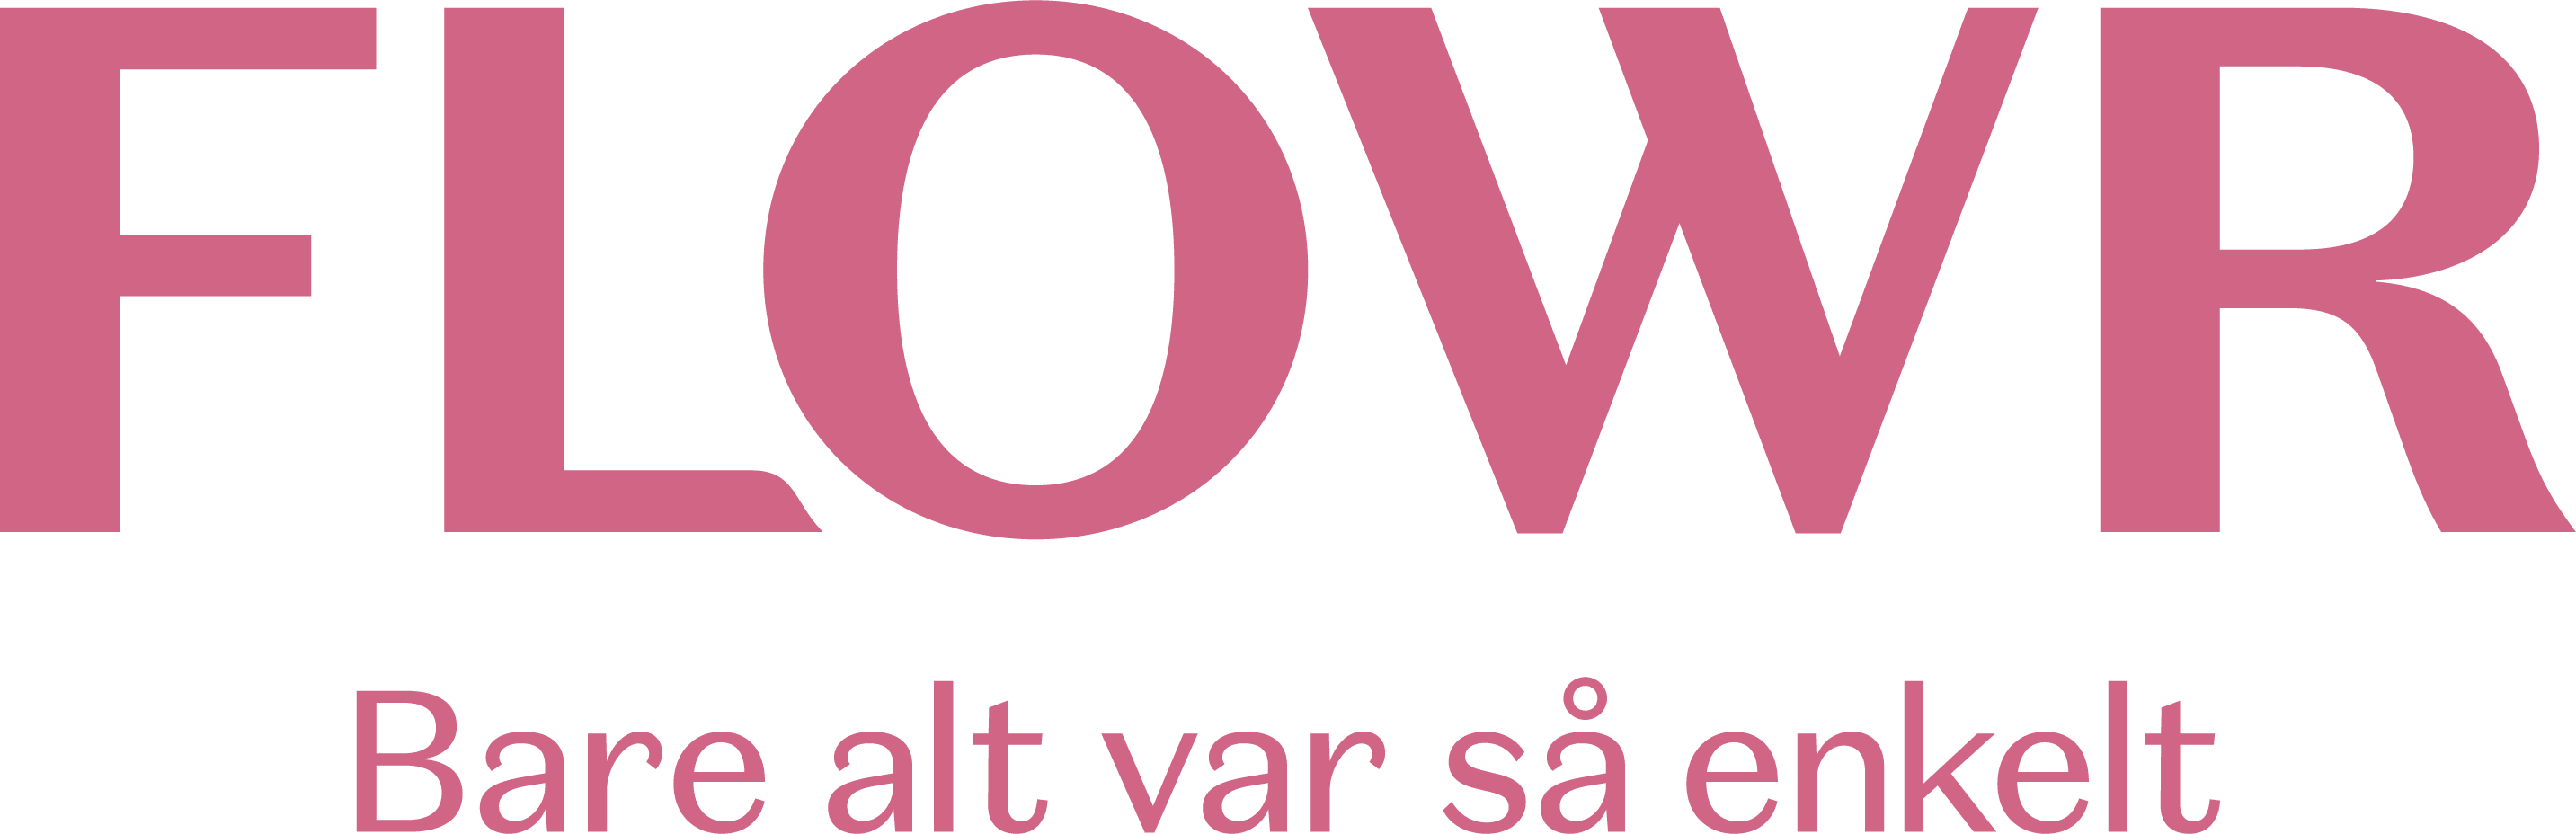 FLOWR logo